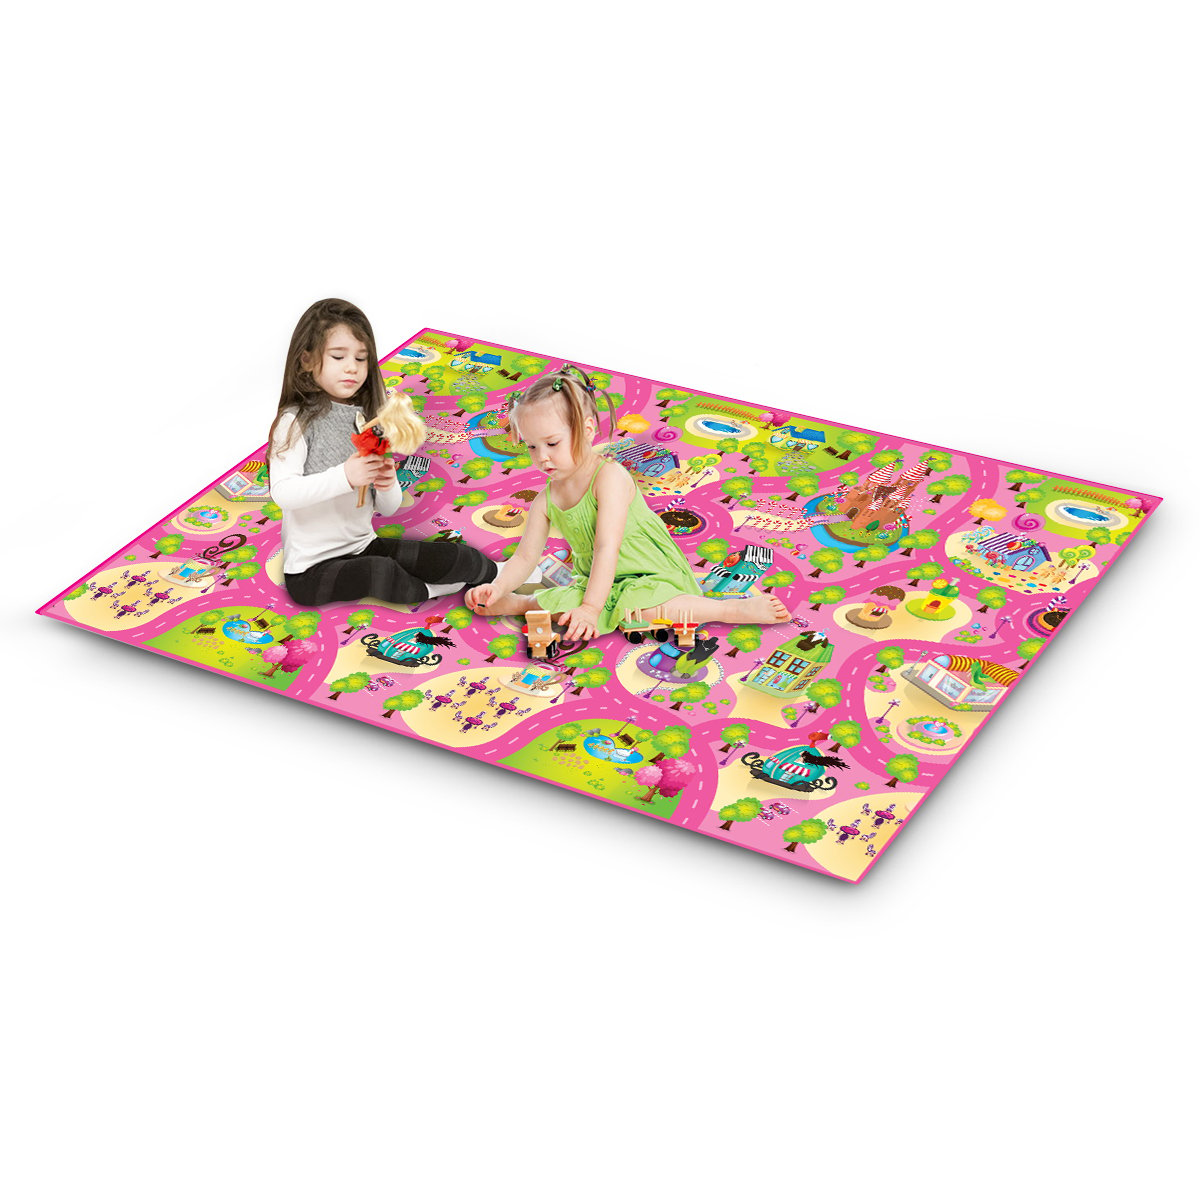 Rollmatz Candyland Baby Kids Play Floor Mat 200cm x 120cm 1